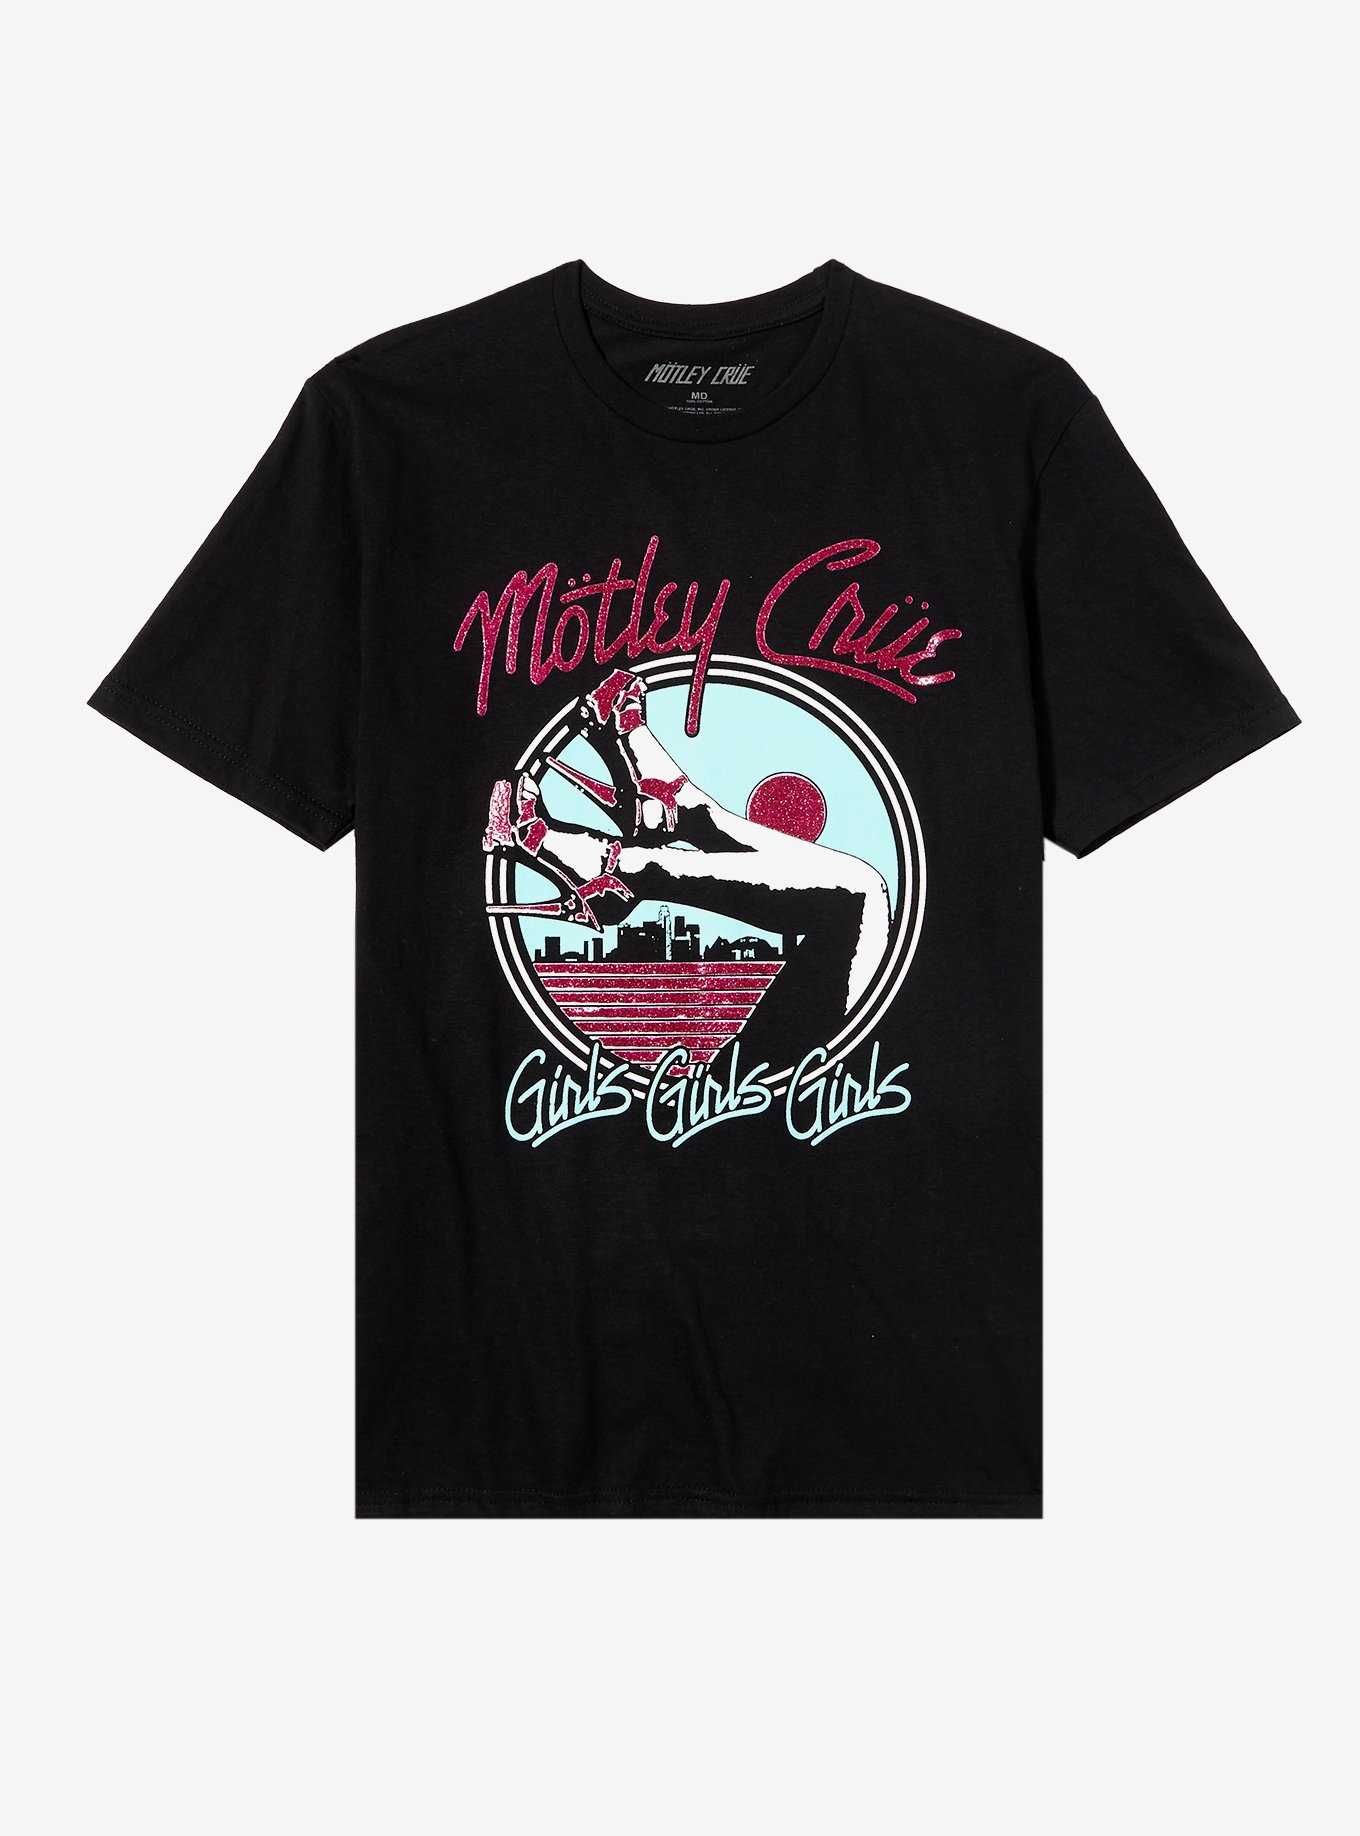 Motley Crue Girls Girls Girls Glitter Logo Boyfriend Fit Girls T-Shirt, , hi-res